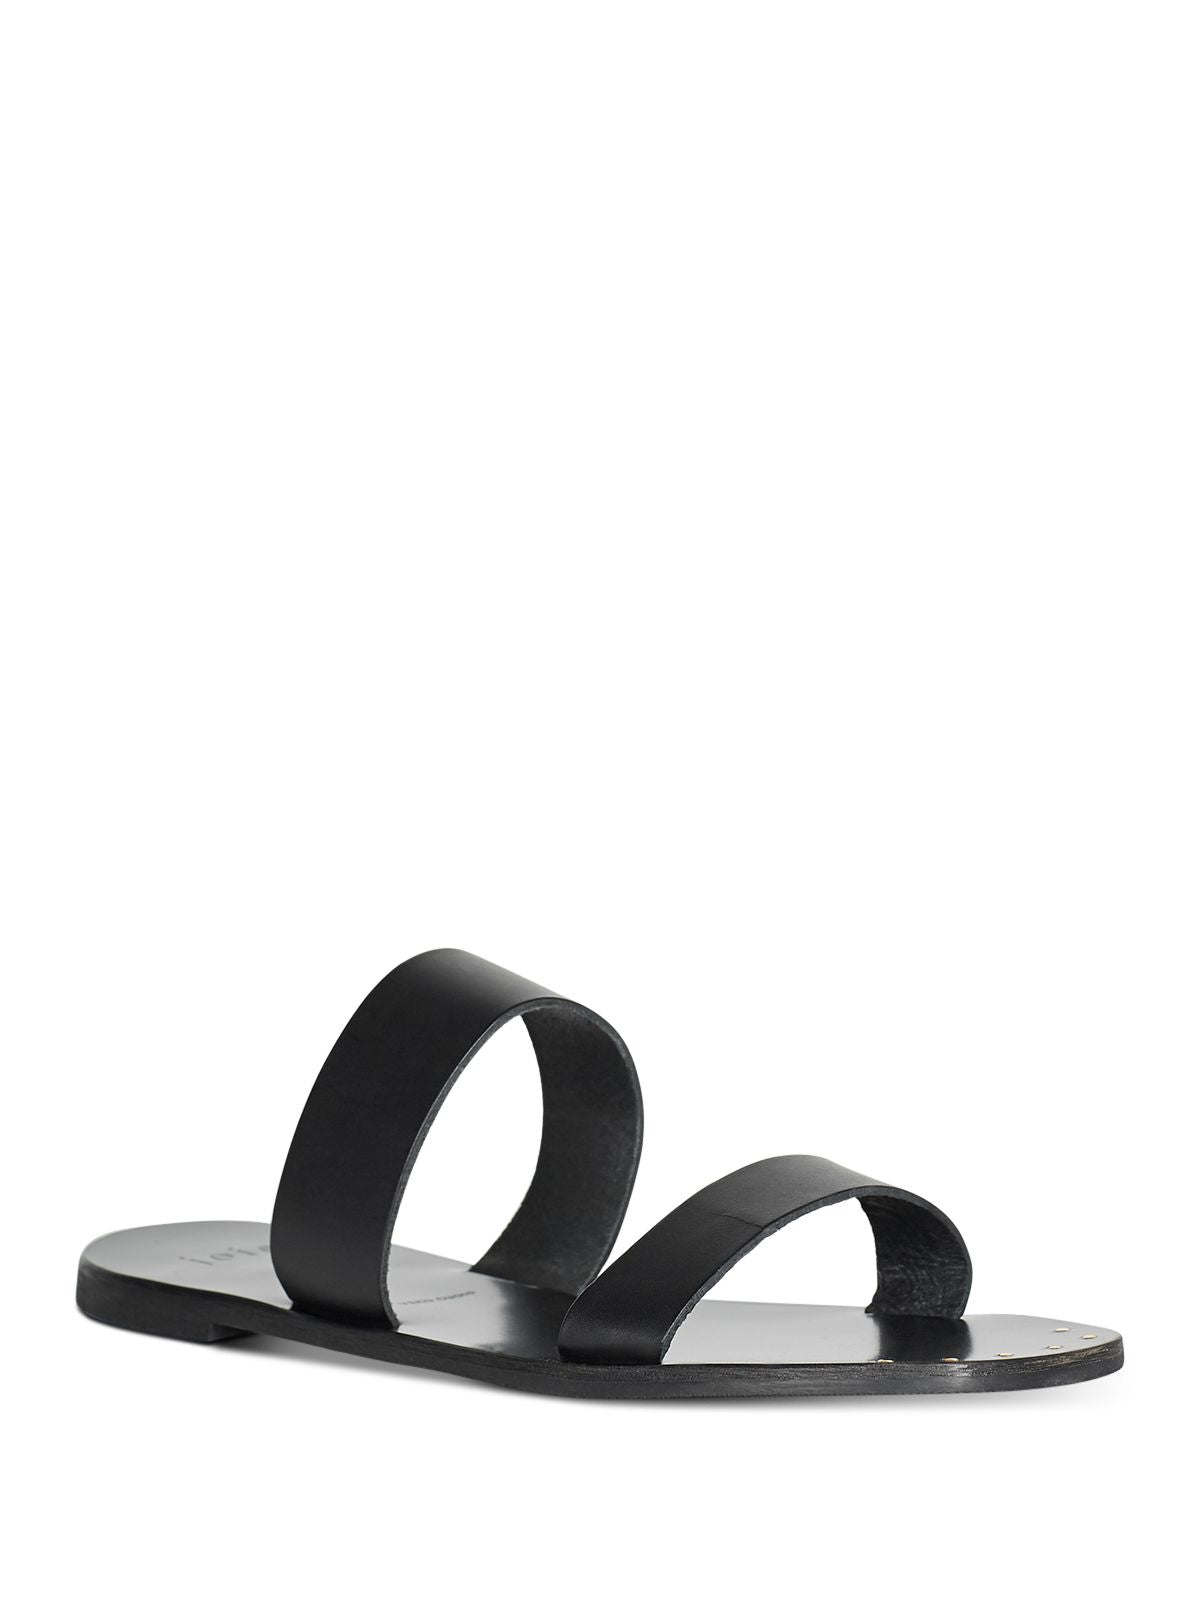 JOIE Womens Black Studded Bannison Square Toe Slip On Leather Slide Sandals Shoes 39.5